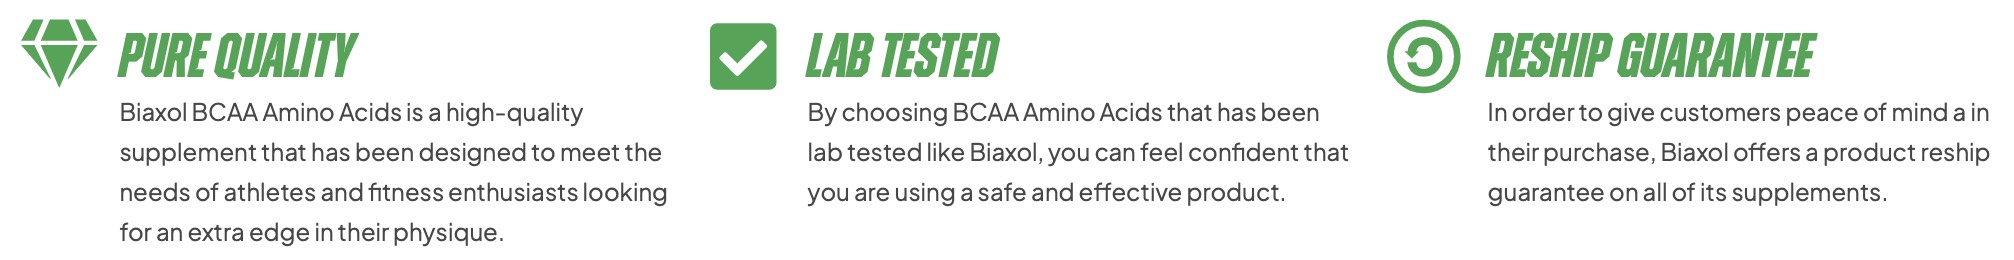 Biaxol BCAA Amino Acids Quality Guarantee